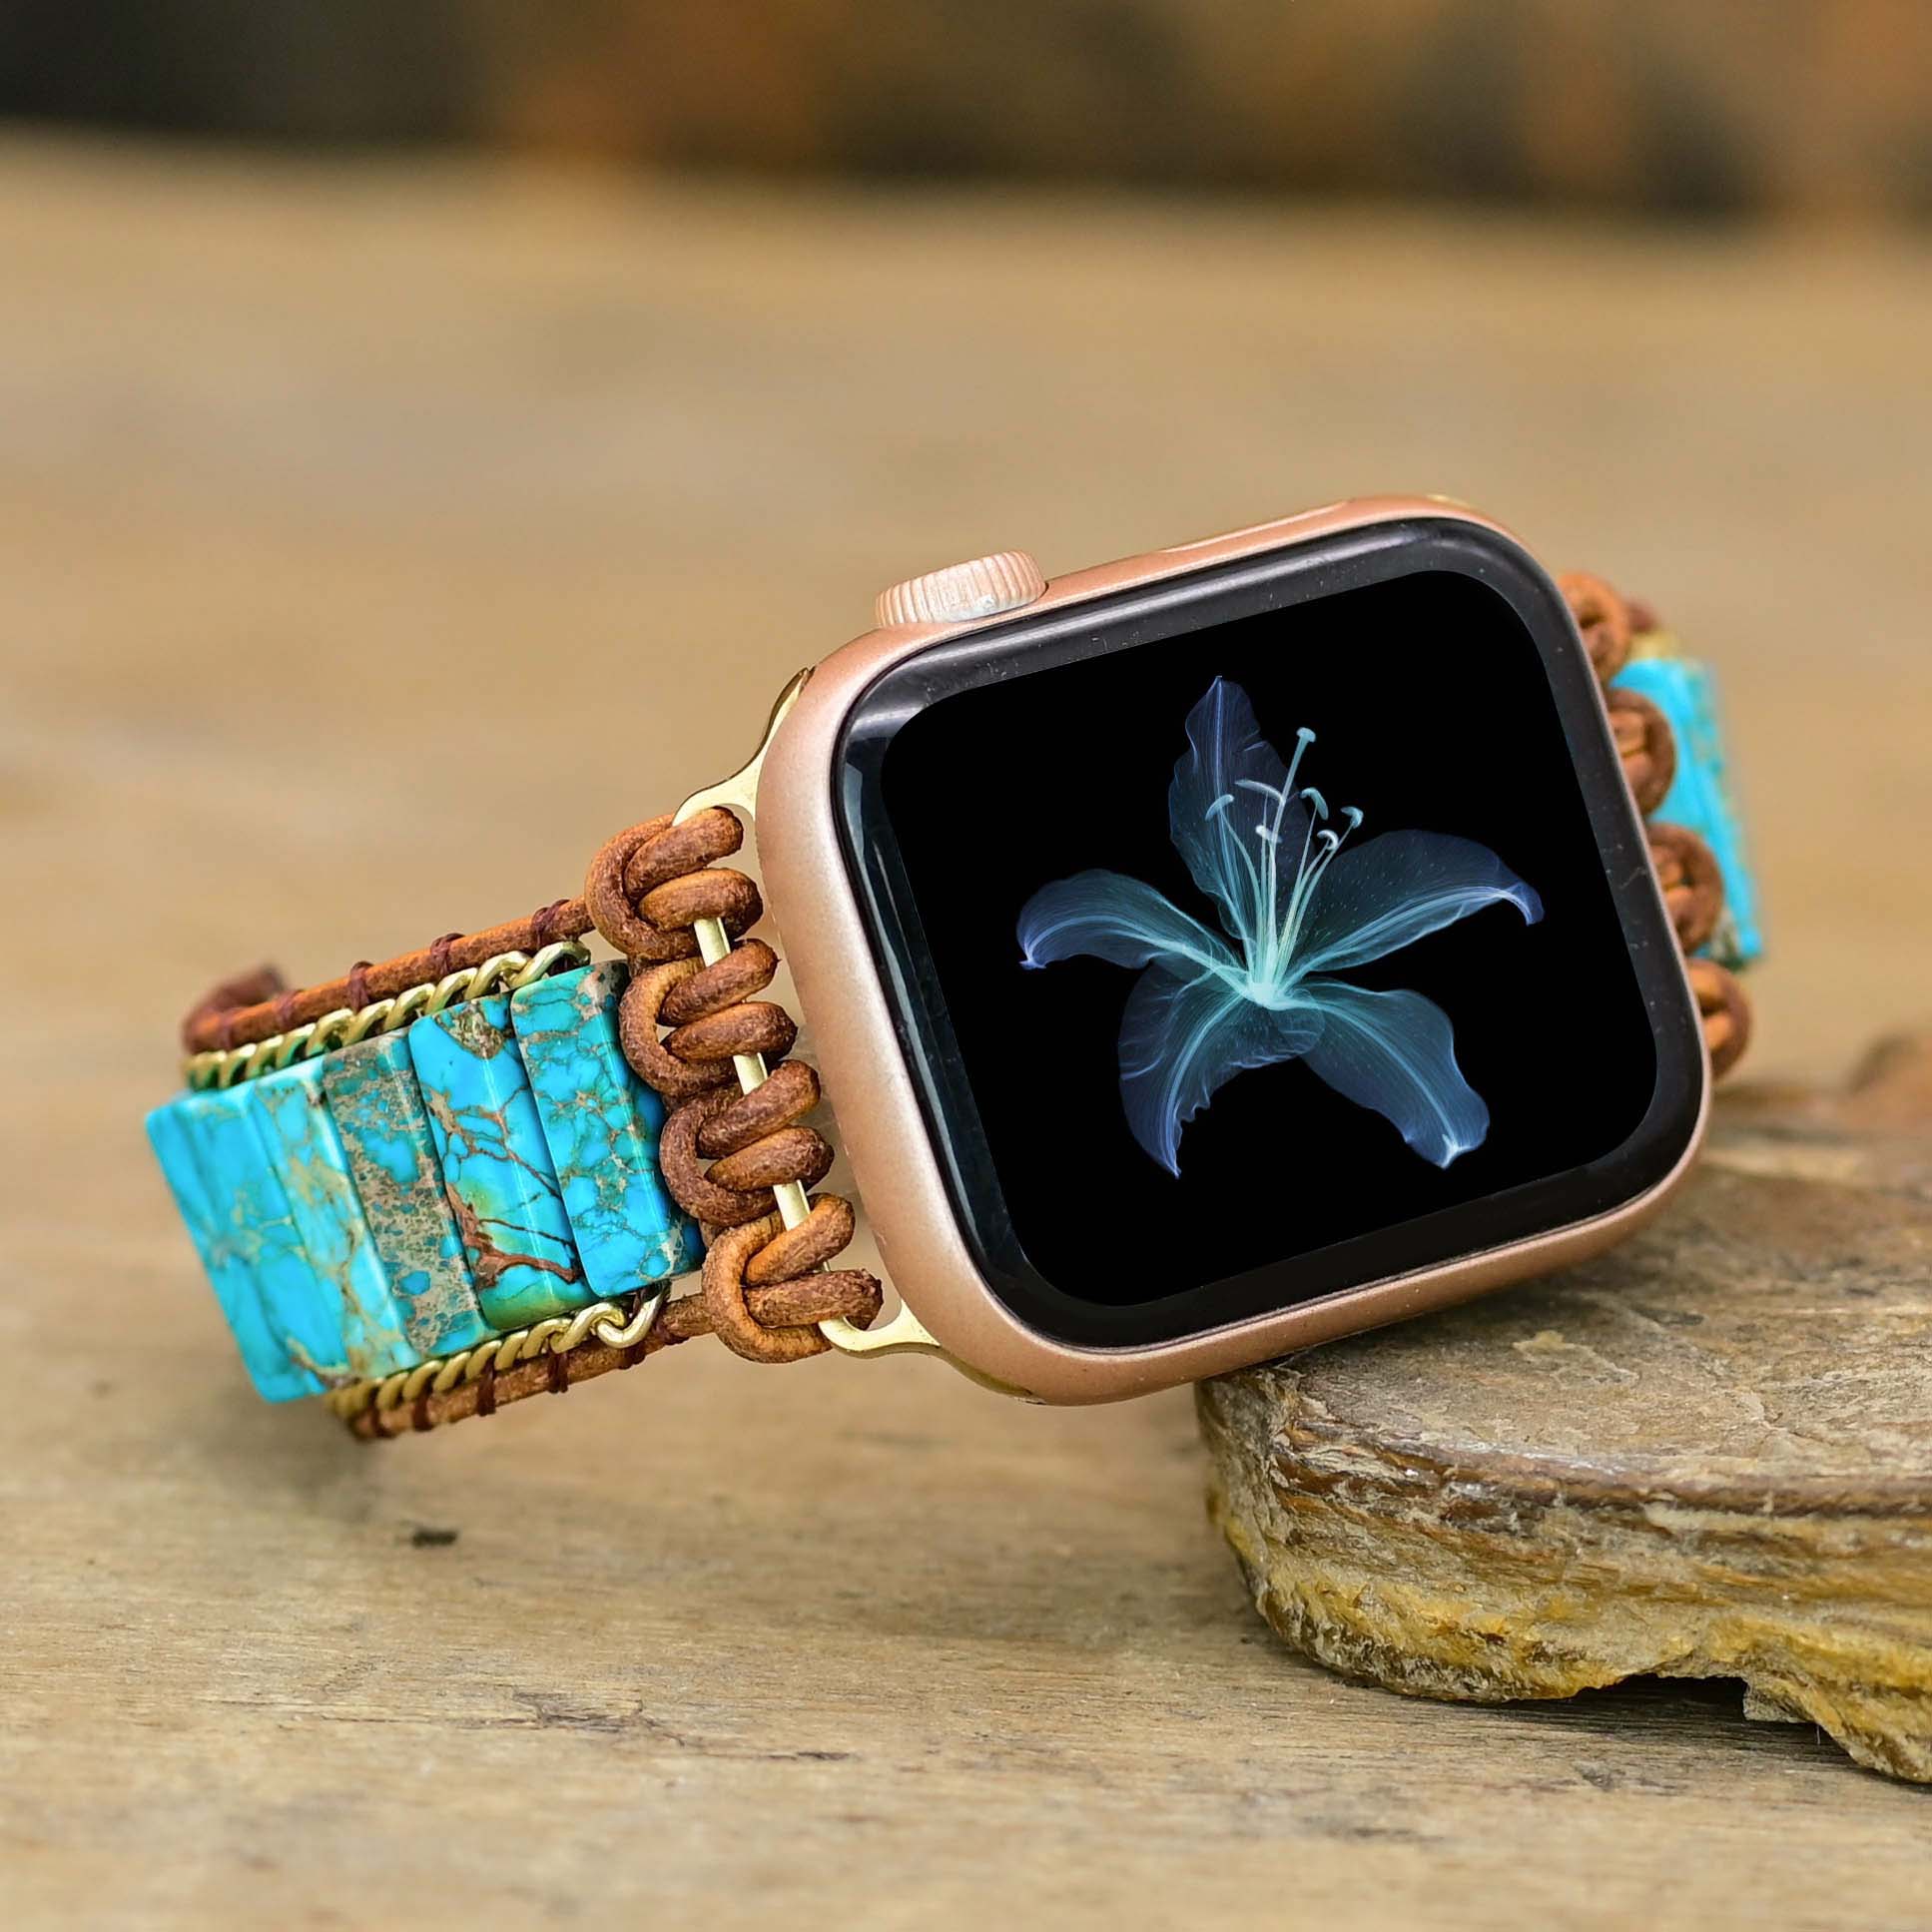 Sports Luxury” – Apple Watch Ultra bands. – Corano Jewelry